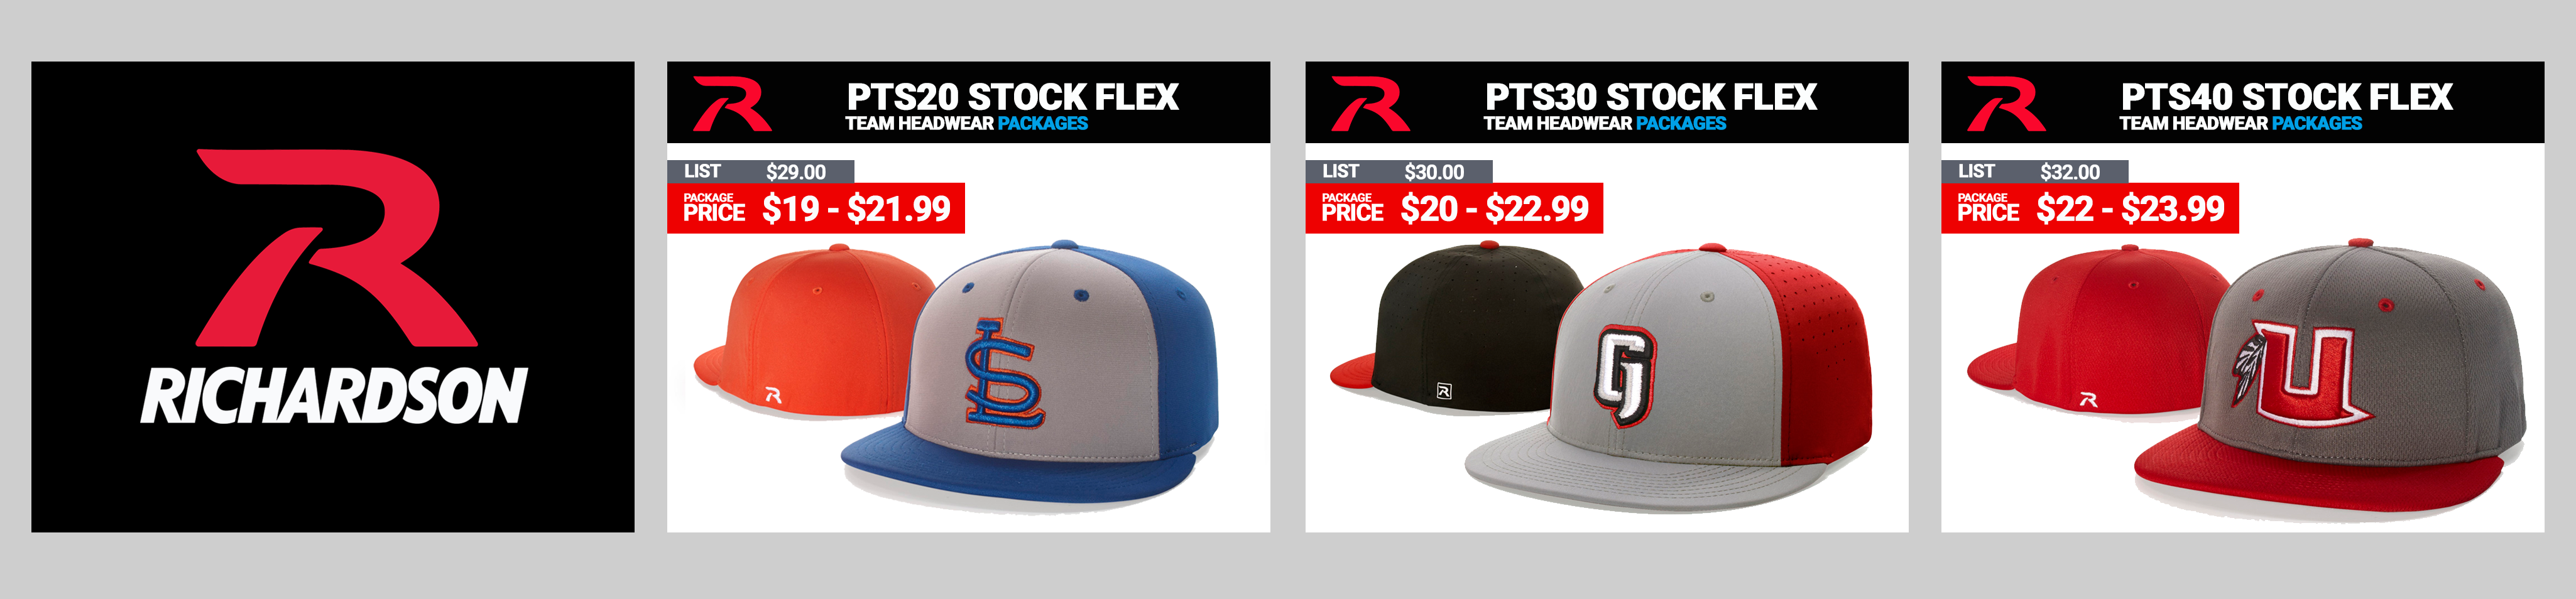 Pro Player Supply  Shop Baseball Team Sales. Guaranteed Low